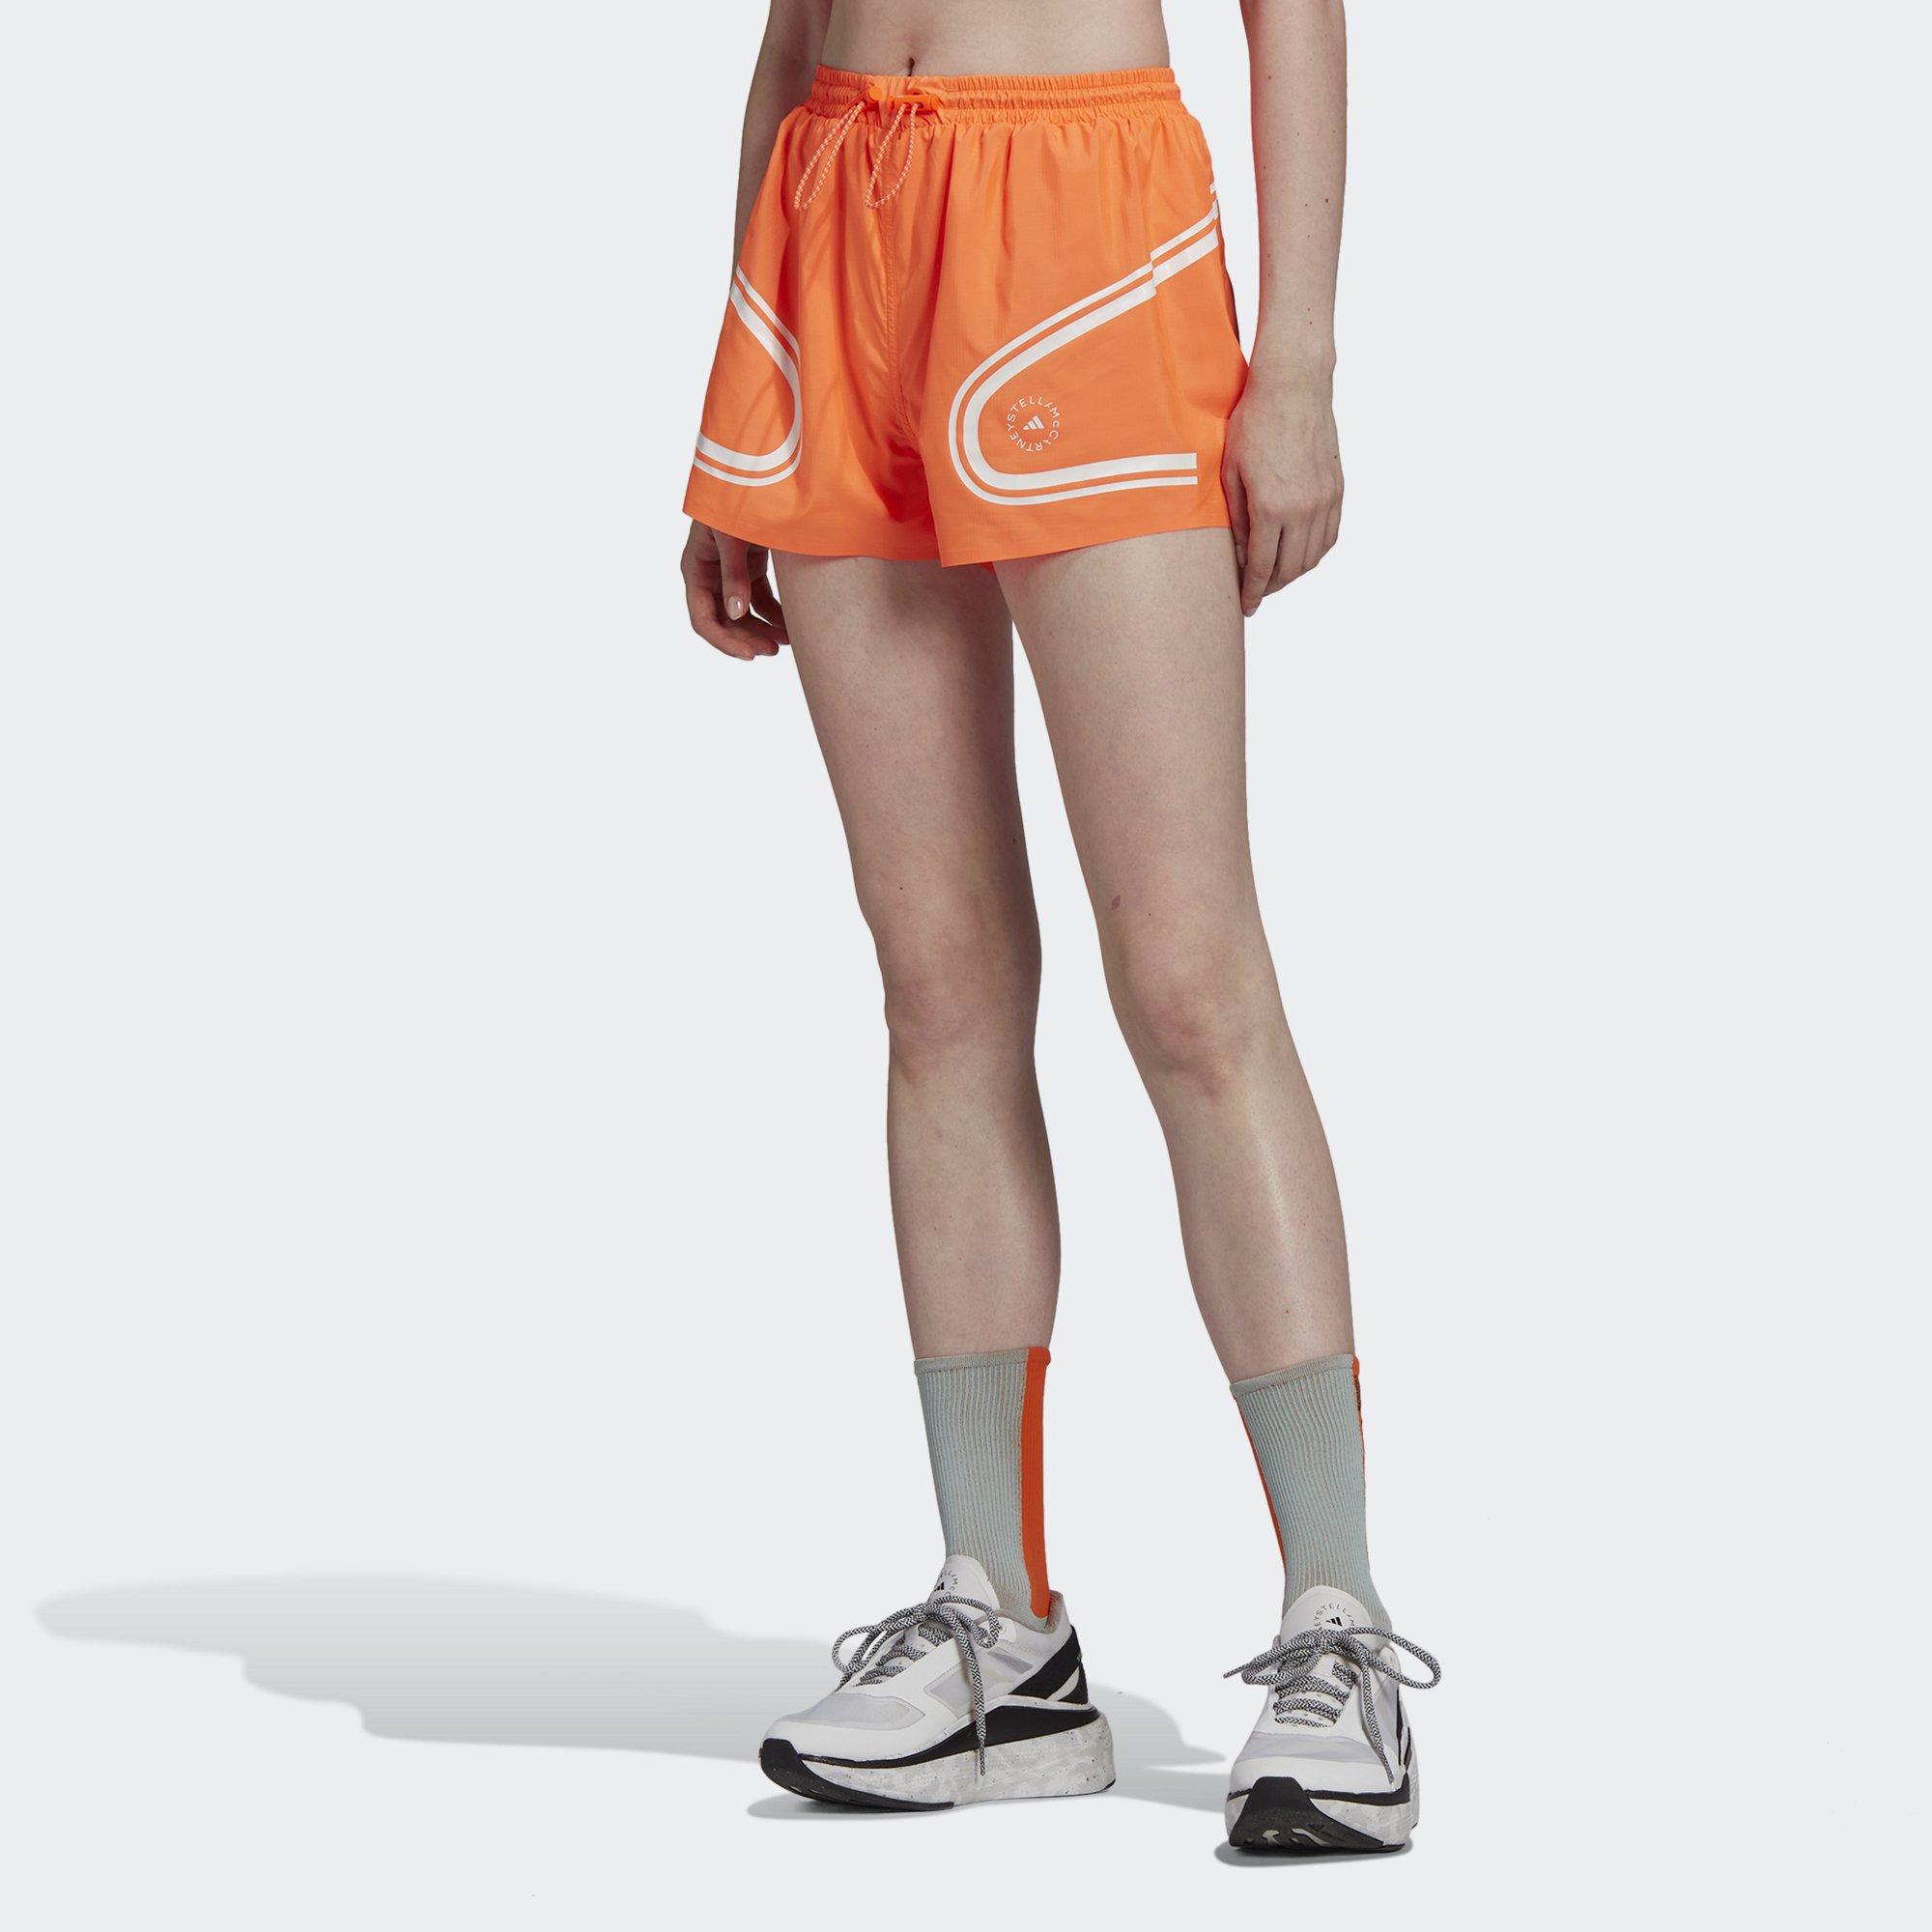 adidas adidas by stella mccartney truepace running shorts women orange size a/s